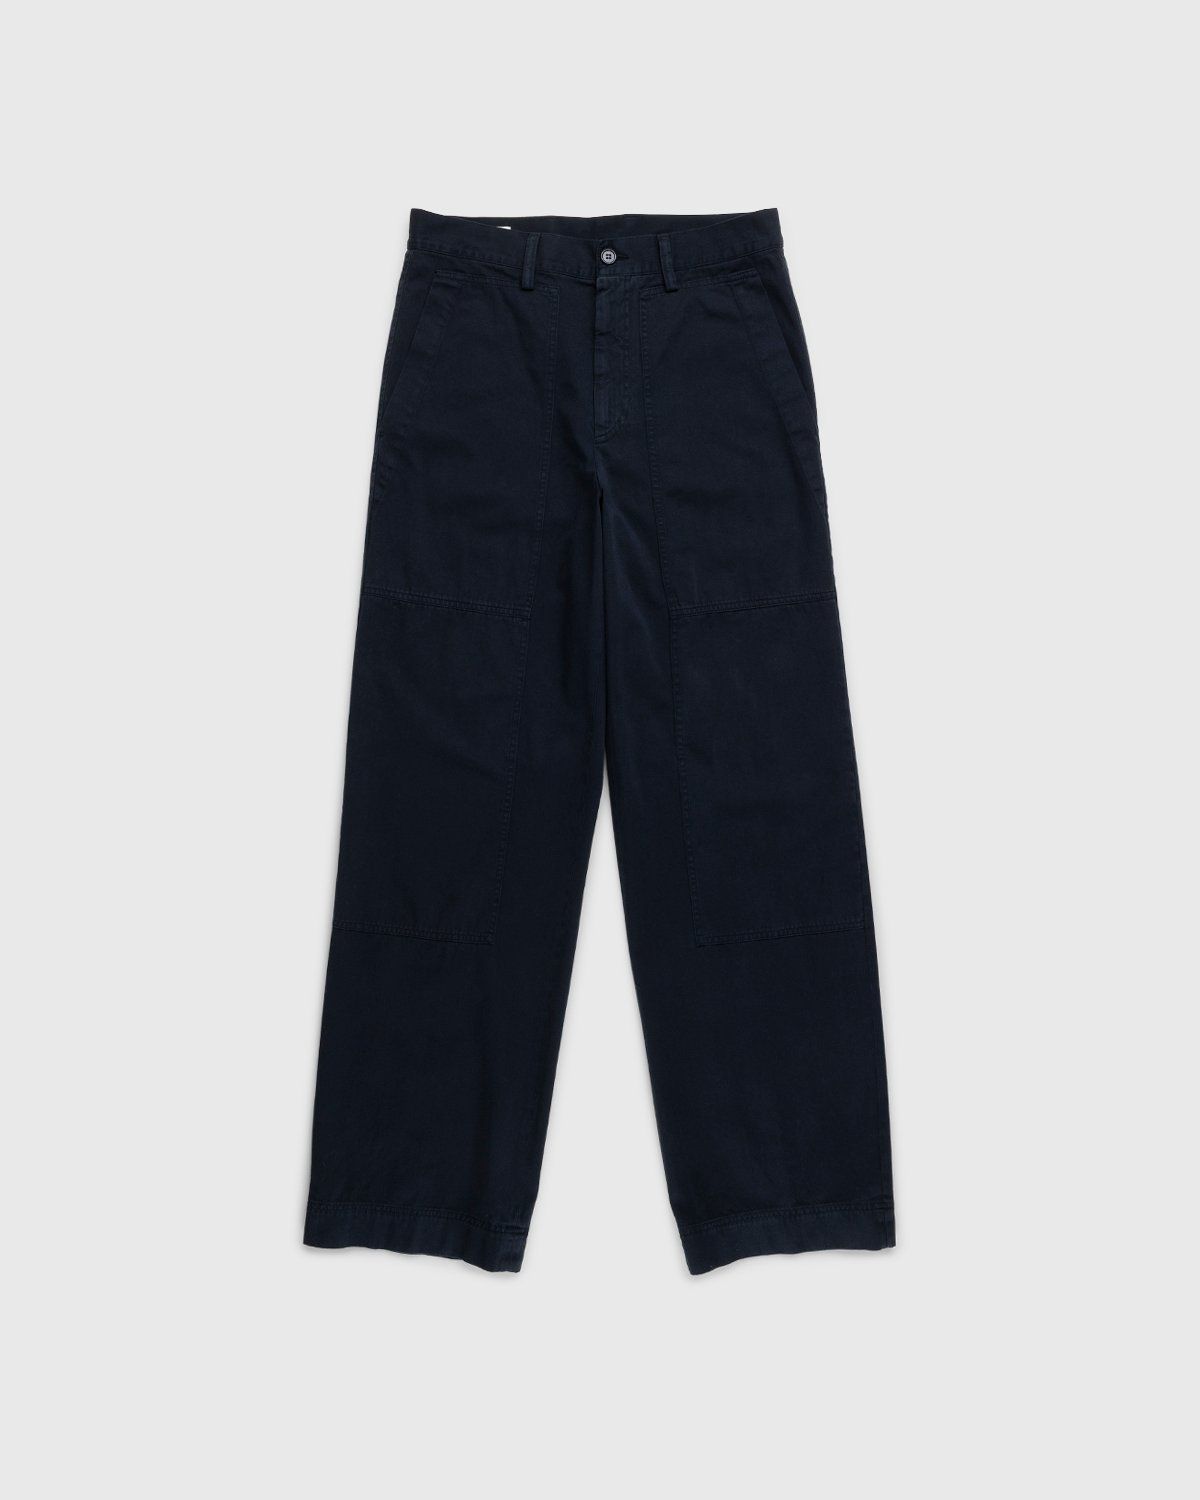 Dries van Noten – Pilson Pants Navy - Pants - Blue - Image 1